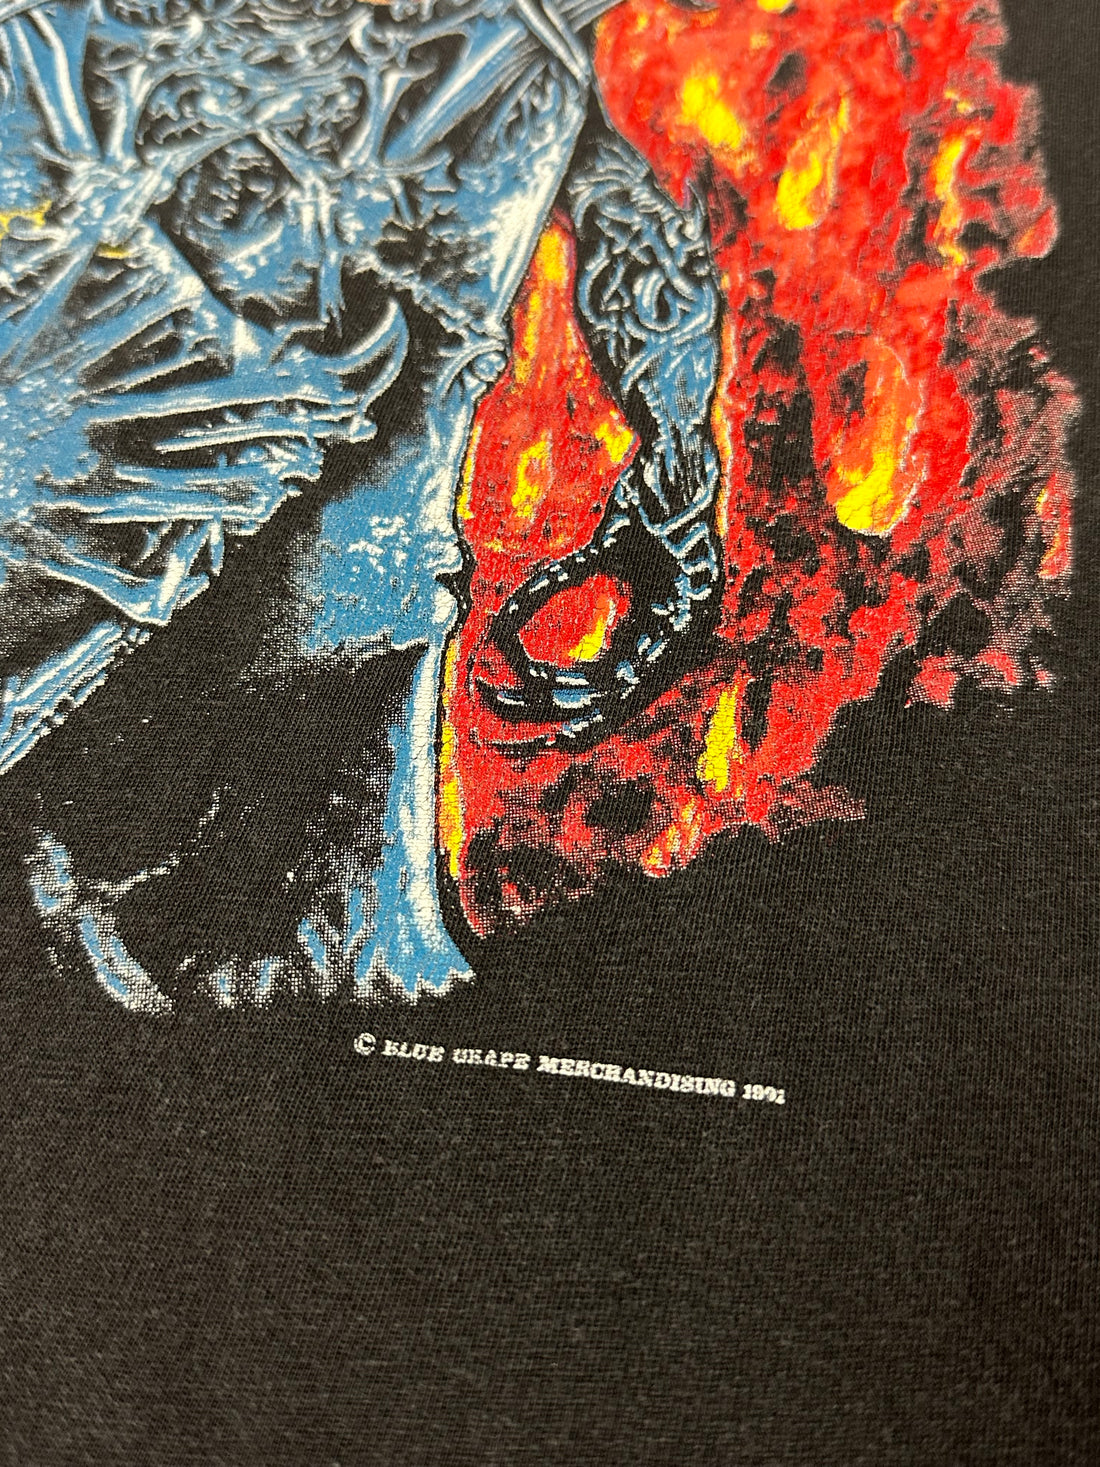 Malevolent Creation 1991 European Tour Vintage T-Shirt